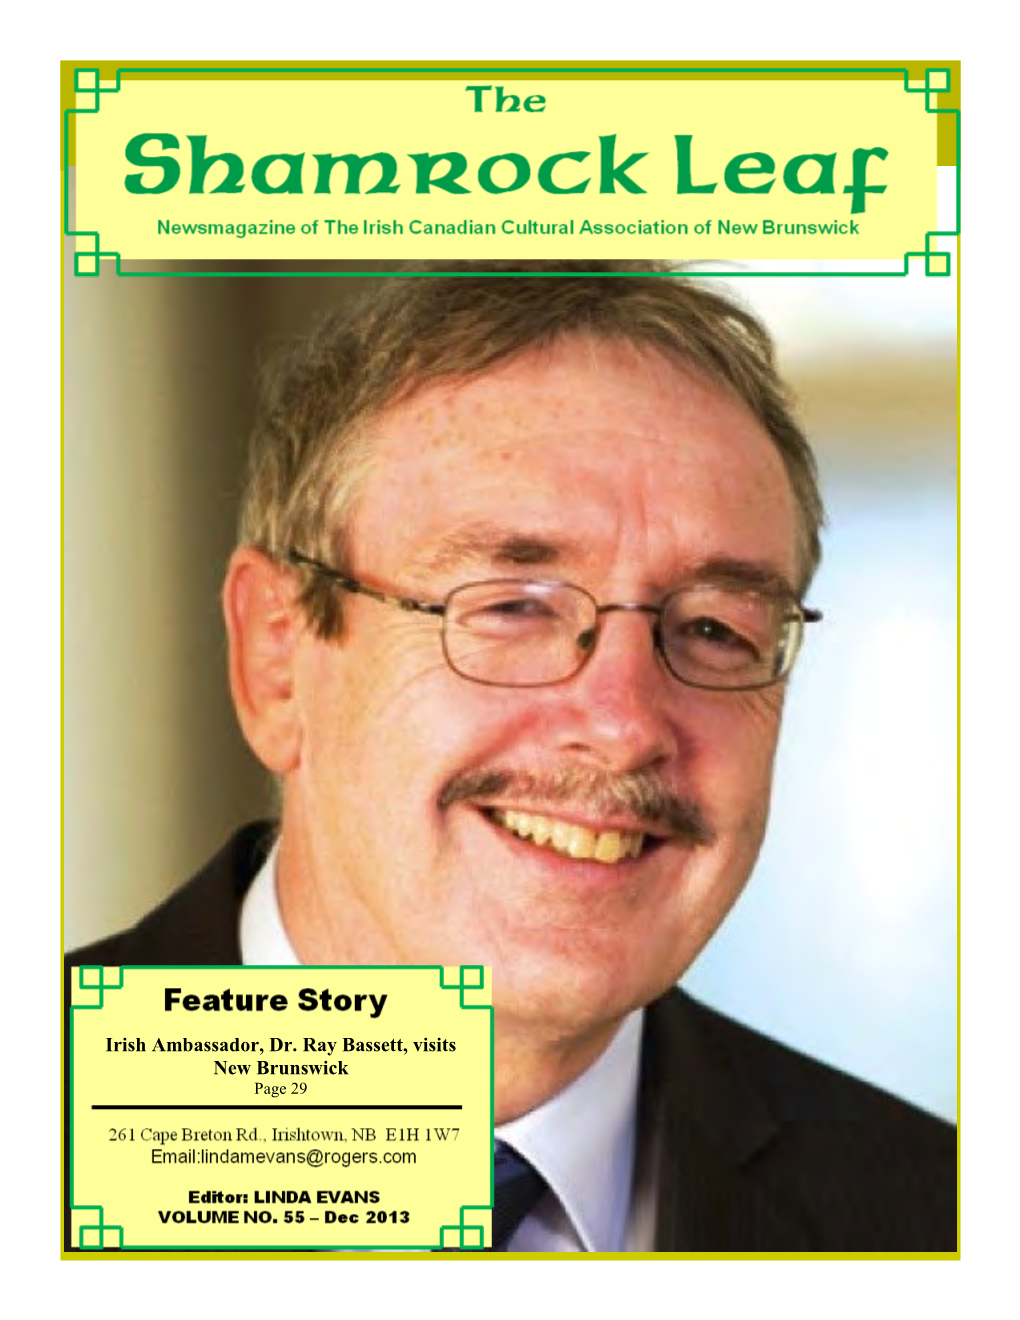 Irish Ambassador, Dr. Ray Bassett, Visits New Brunswick Page 29 2 Shamrock Leaf December 2013